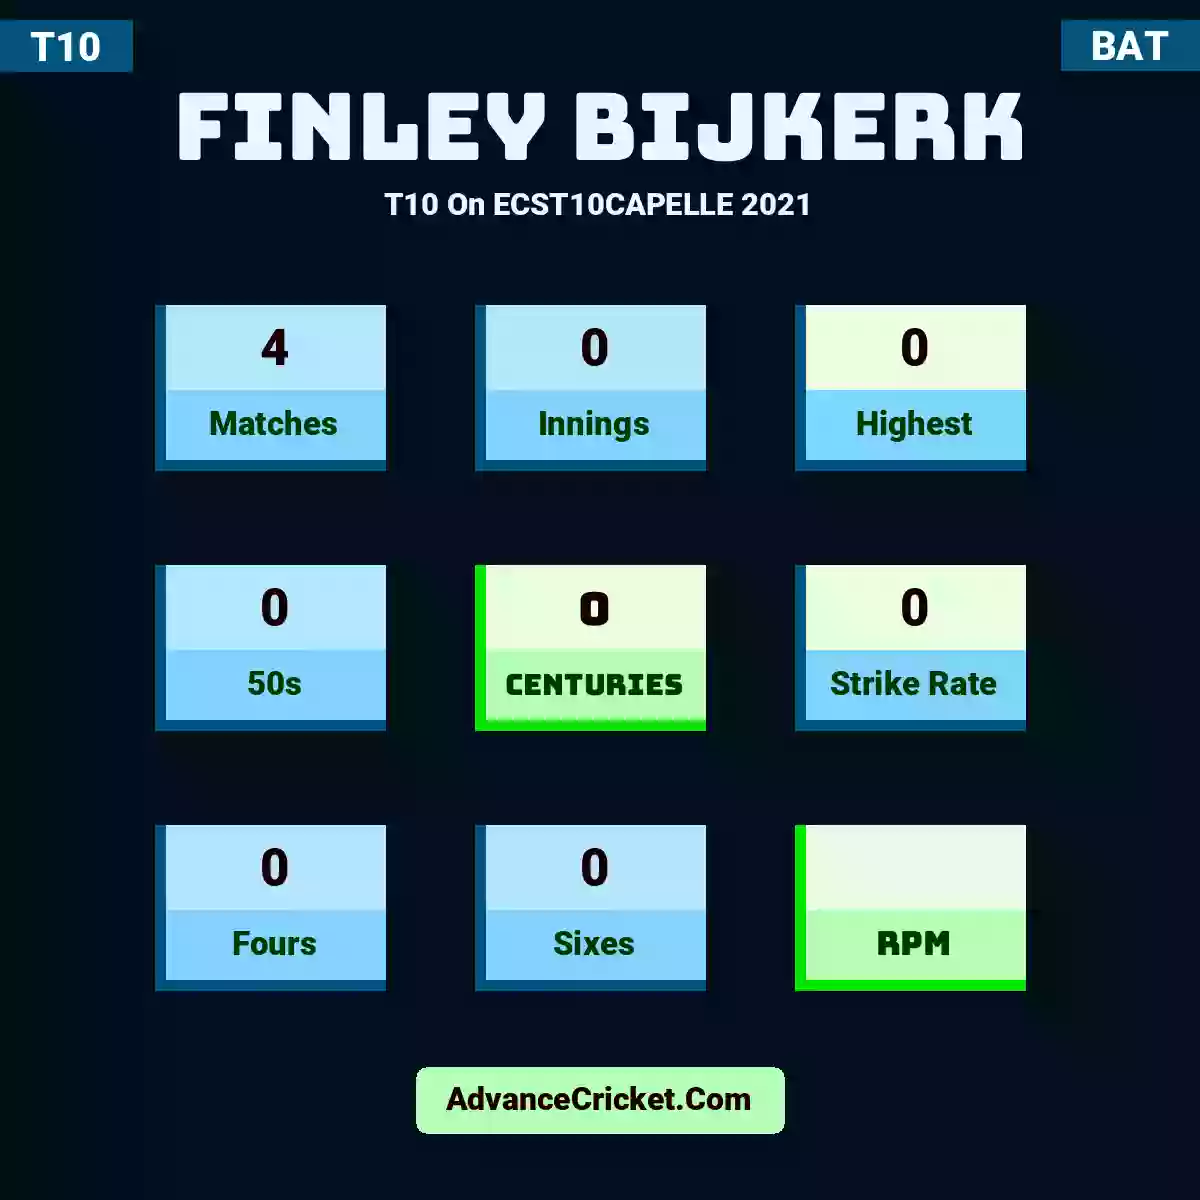 Finley Bijkerk T10  On ECST10CAPELLE 2021, Finley Bijkerk played 4 matches, scored 0 runs as highest, 0 half-centuries, and 0 centuries, with a strike rate of 0. F.Bijkerk hit 0 fours and 0 sixes.